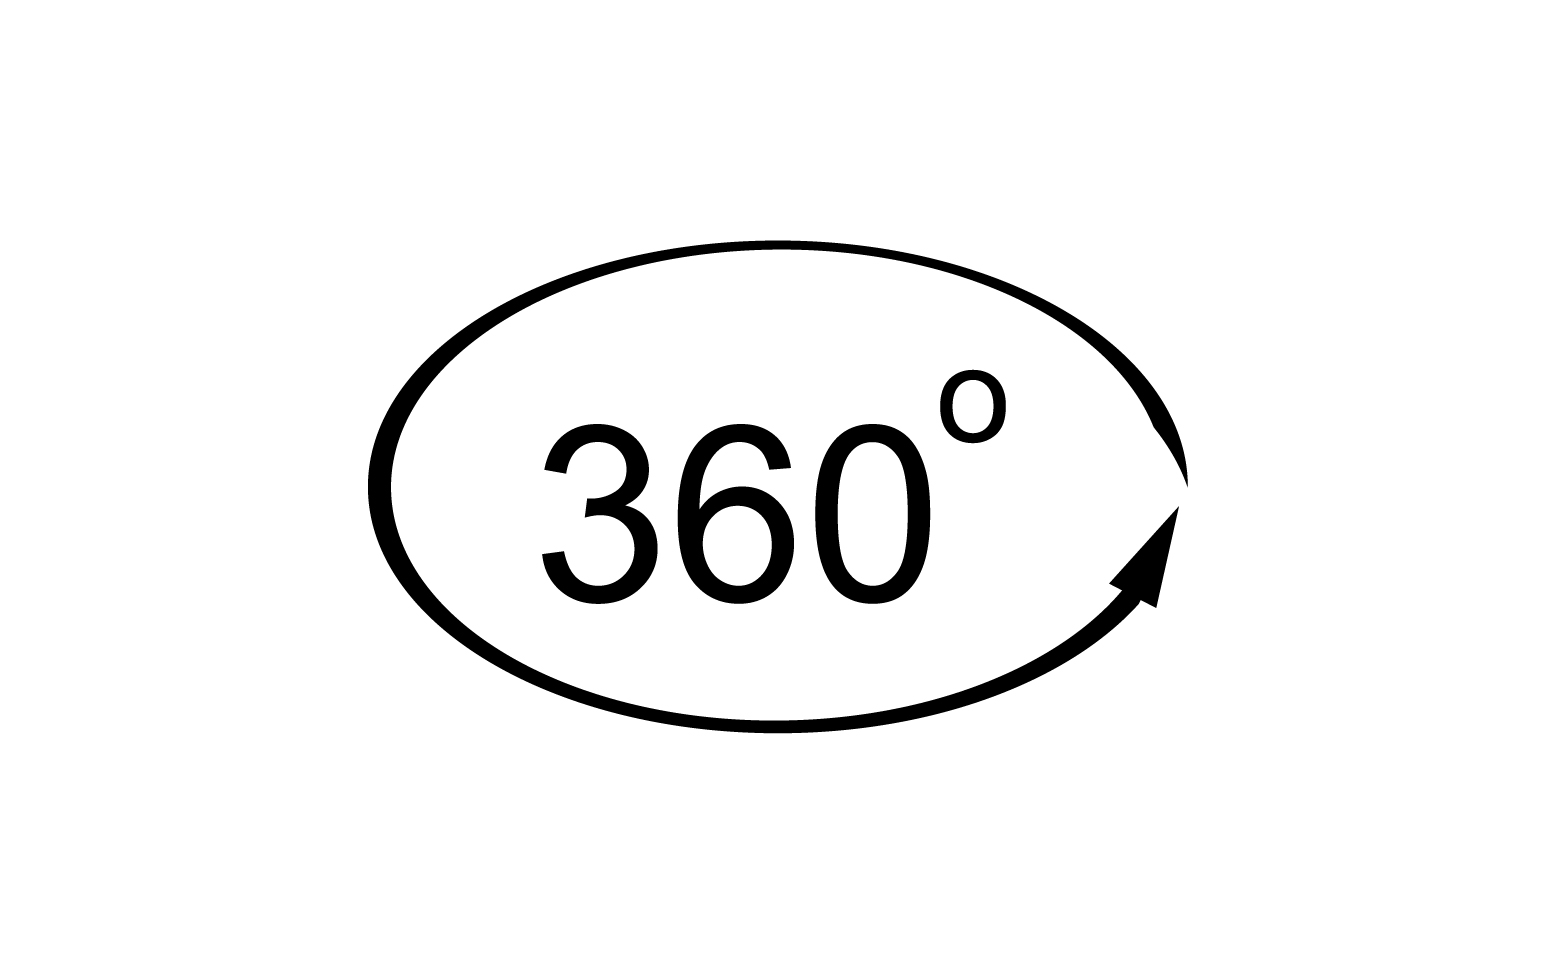 360 degree angle rotation icon symbol logo version v36